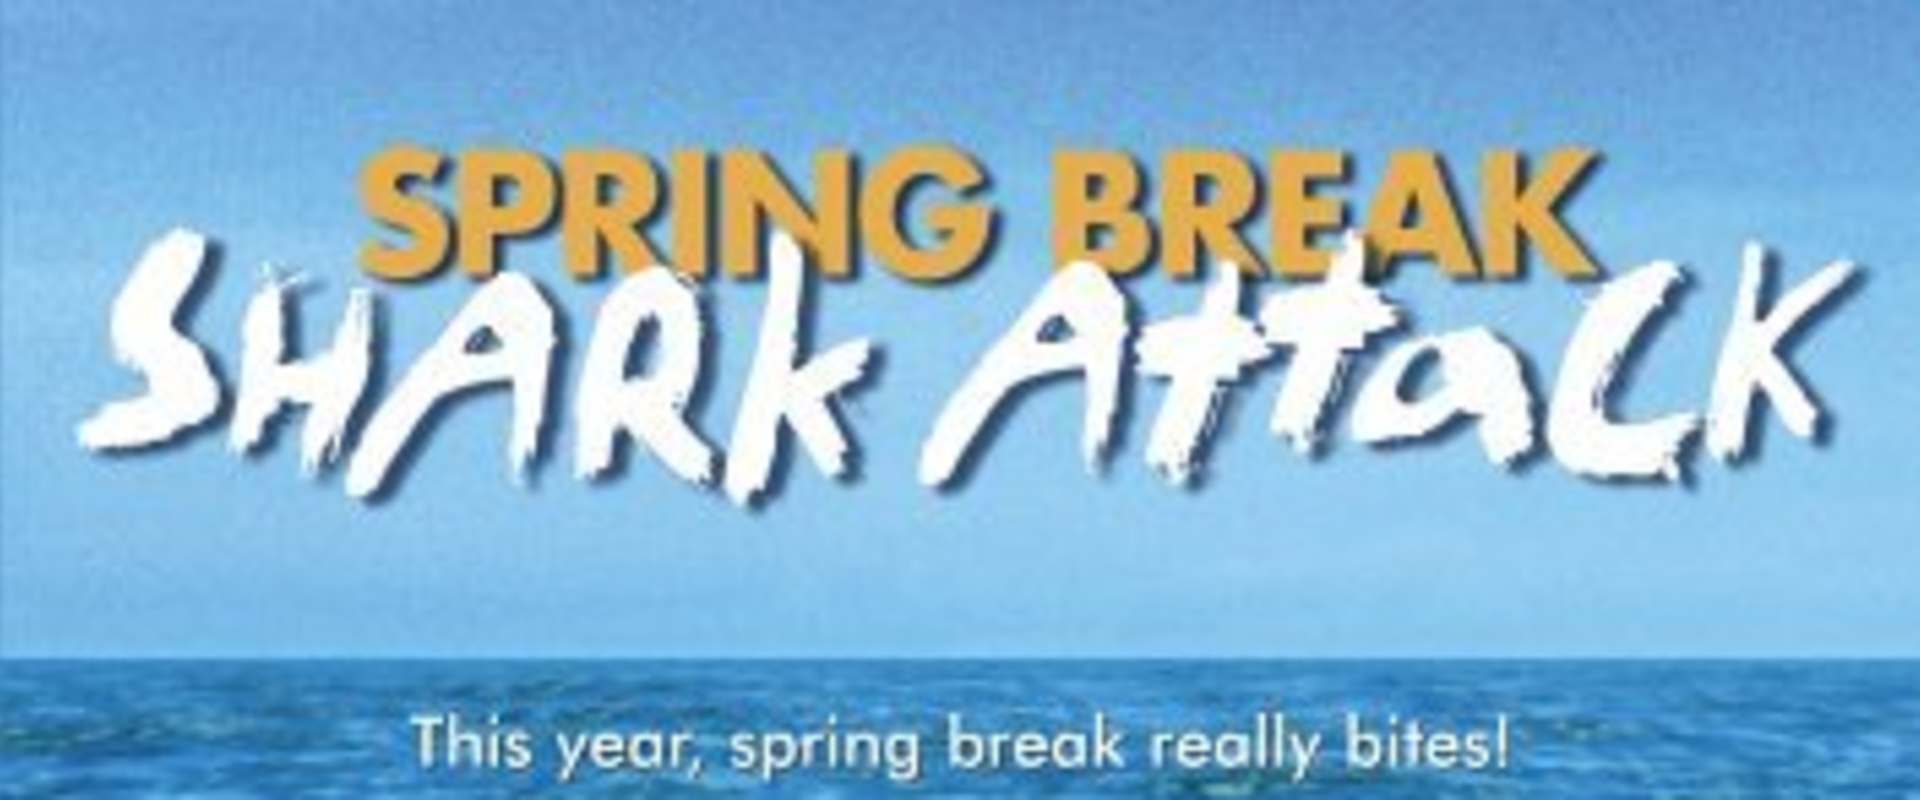 Spring Break Shark Attack background 2